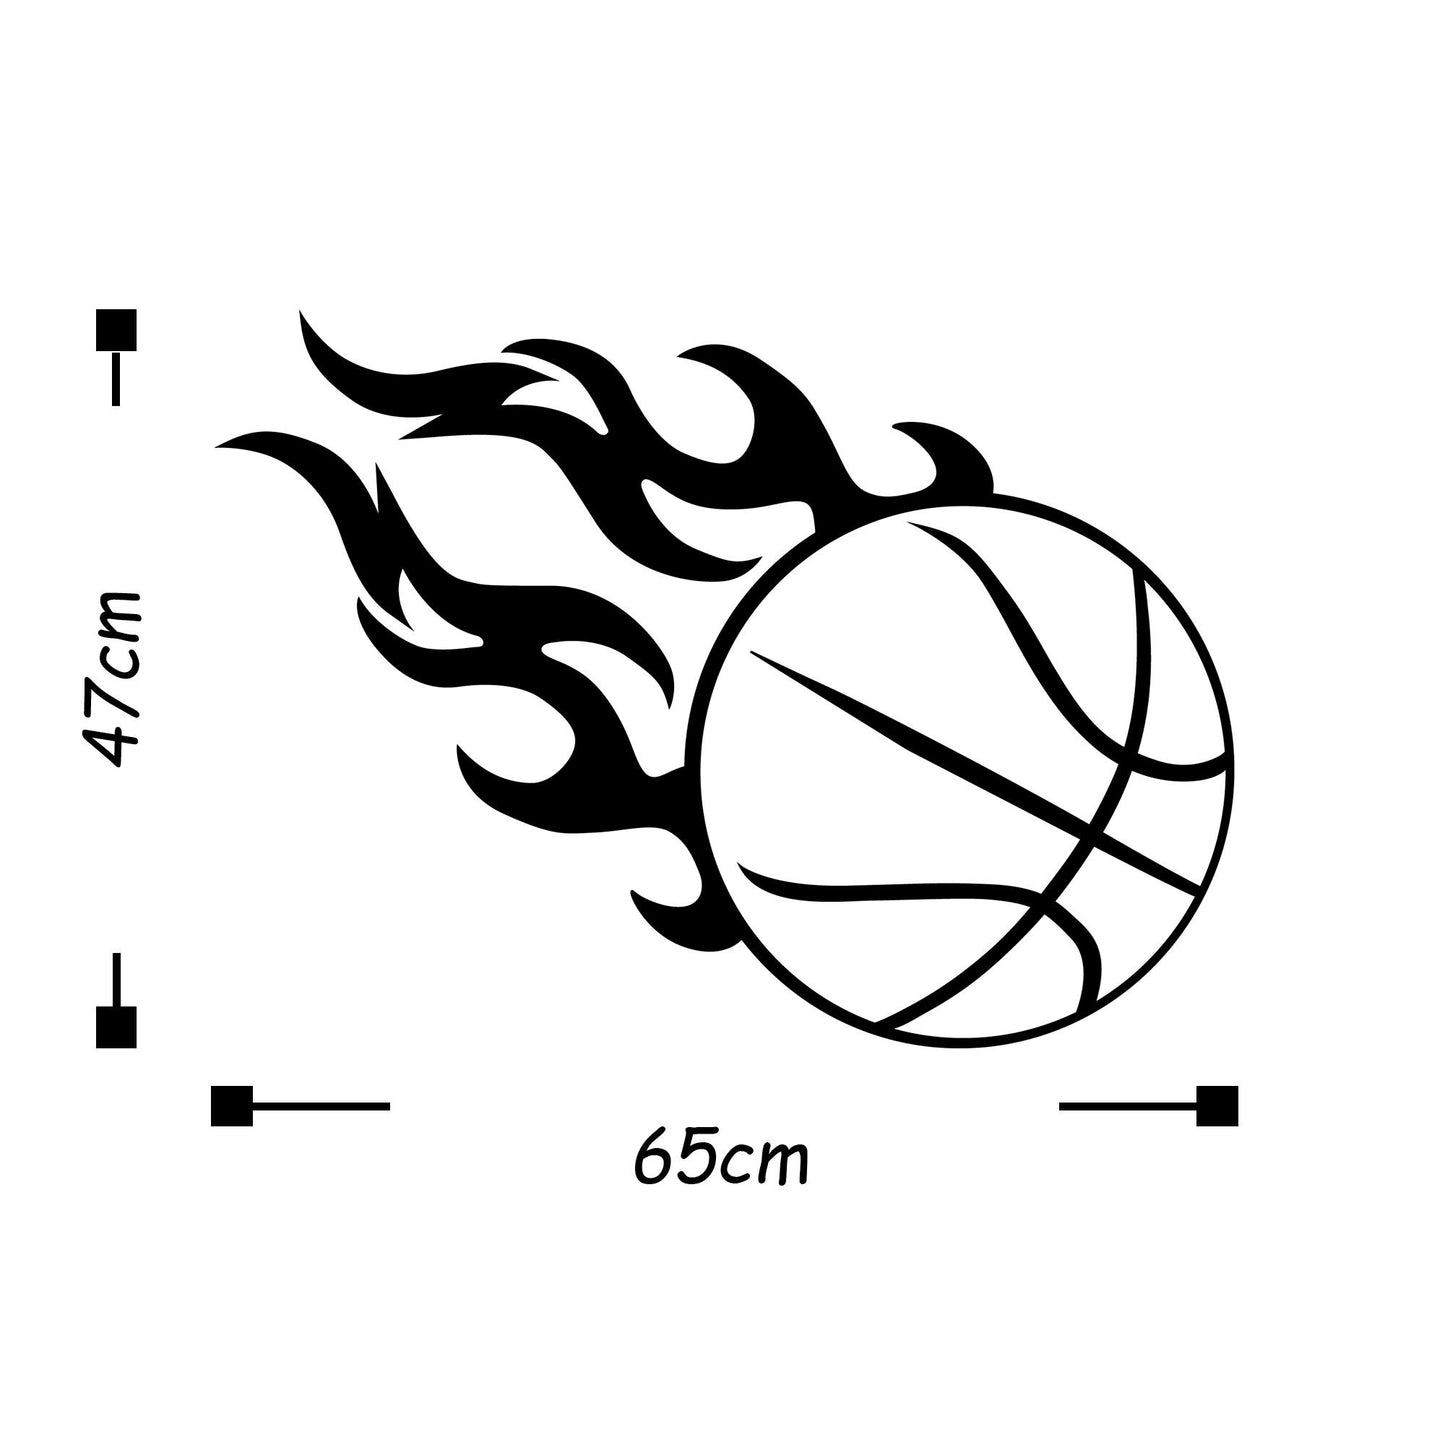 Fireball - Black - Decorative Metal Wall Accessory